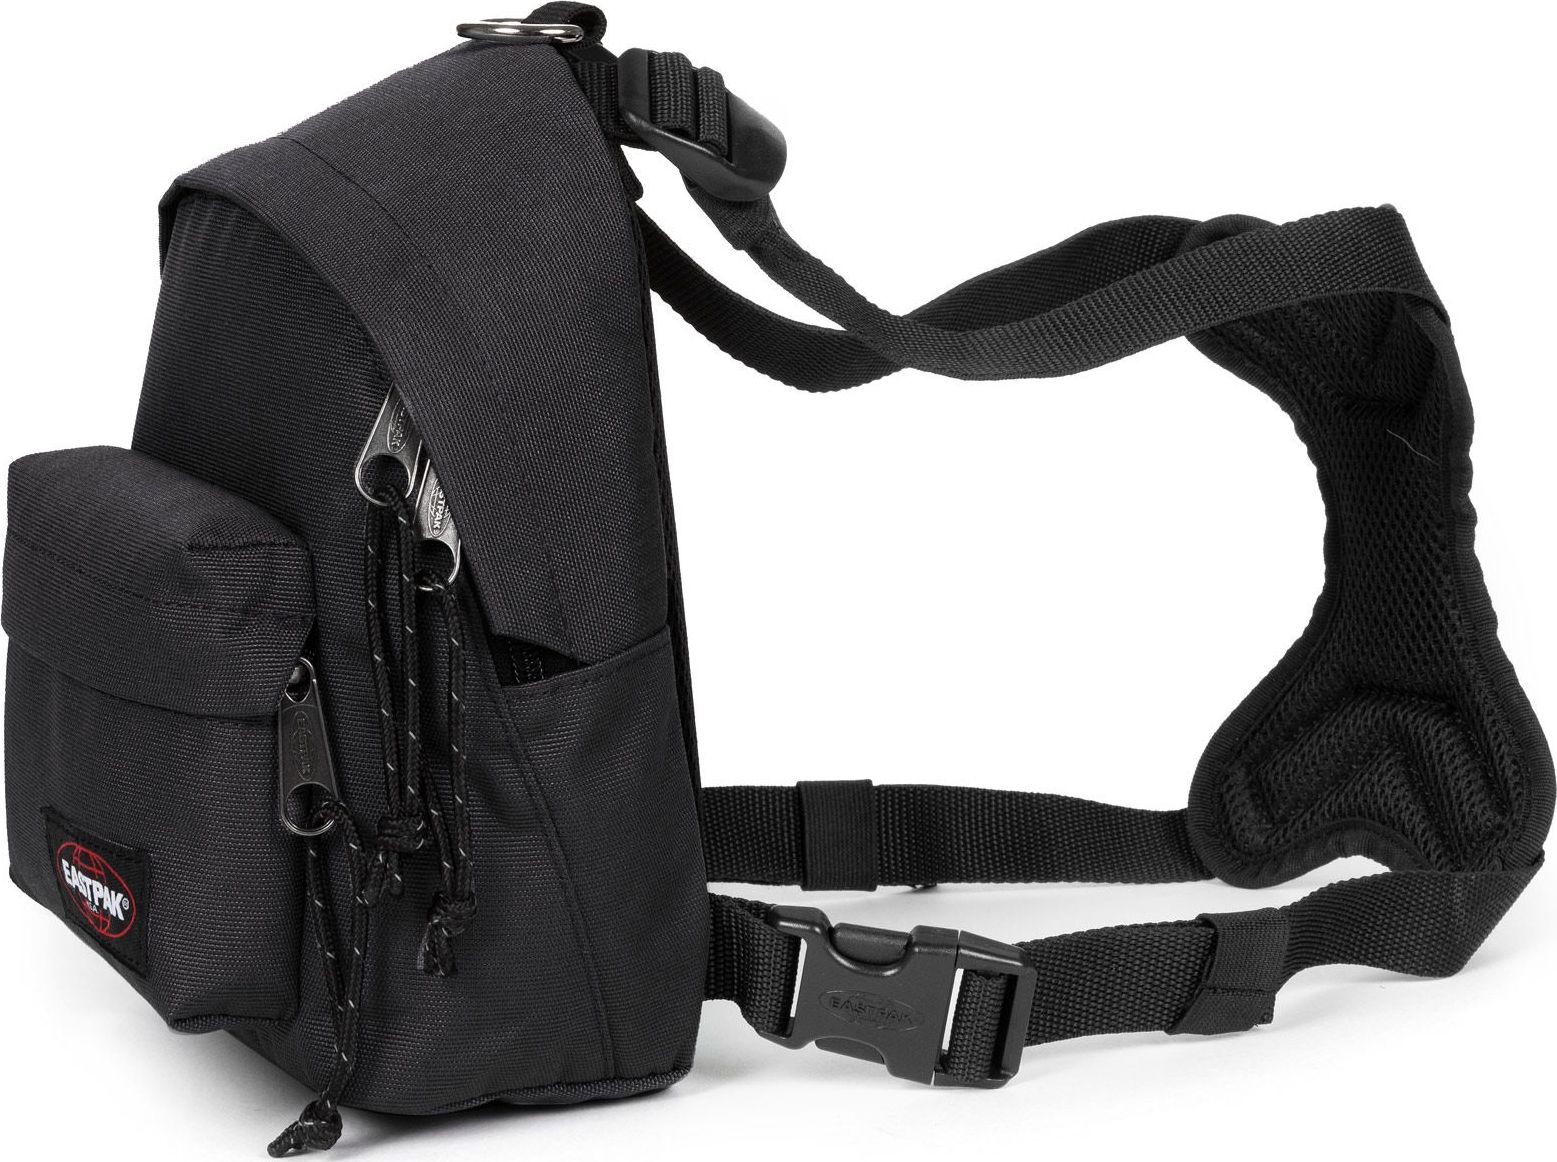 SG Combopak 1.0 Cricket Kit Bag Medium Sized Individual Kit Bag with Wheels  | Buy Online, Cricket Shop India | Price, Photos, Detailed Features |  Cricket Kit Bags